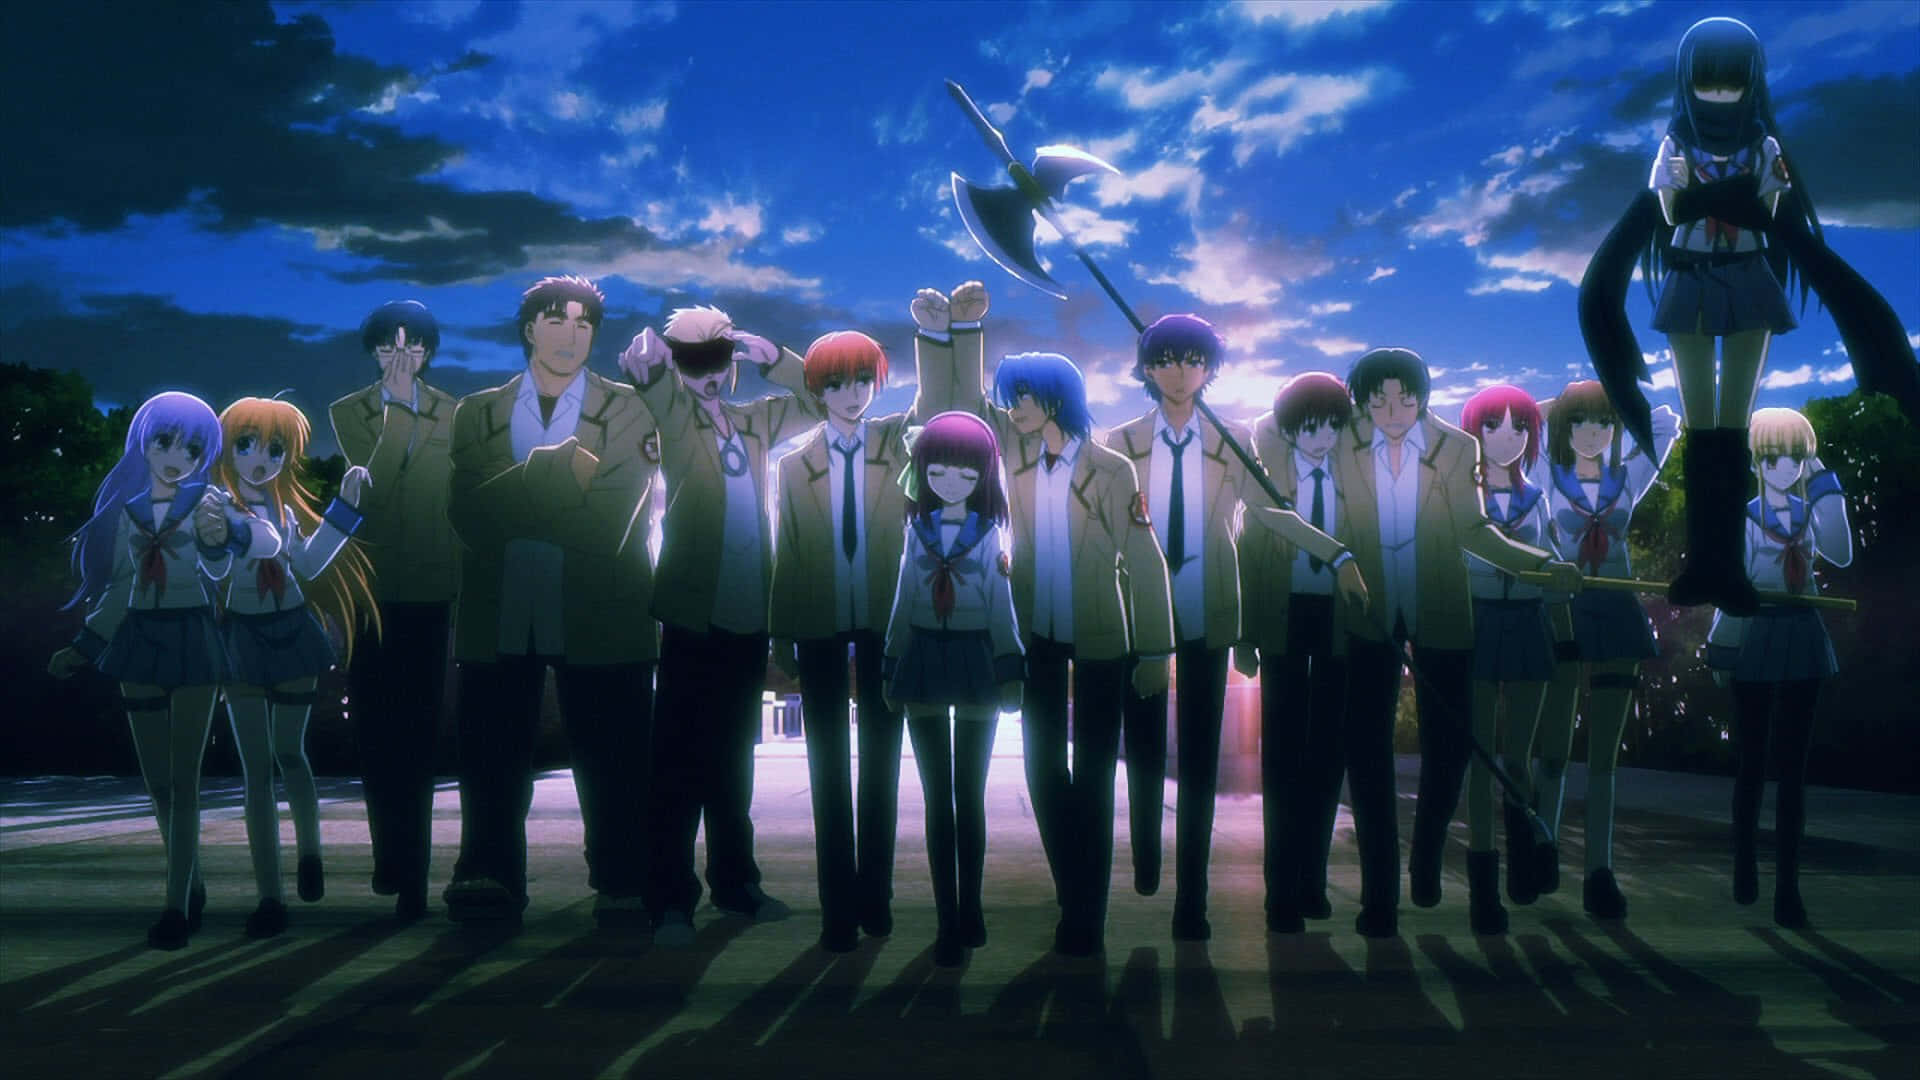 Enrolig Grupp Av Anime-vänner. Wallpaper